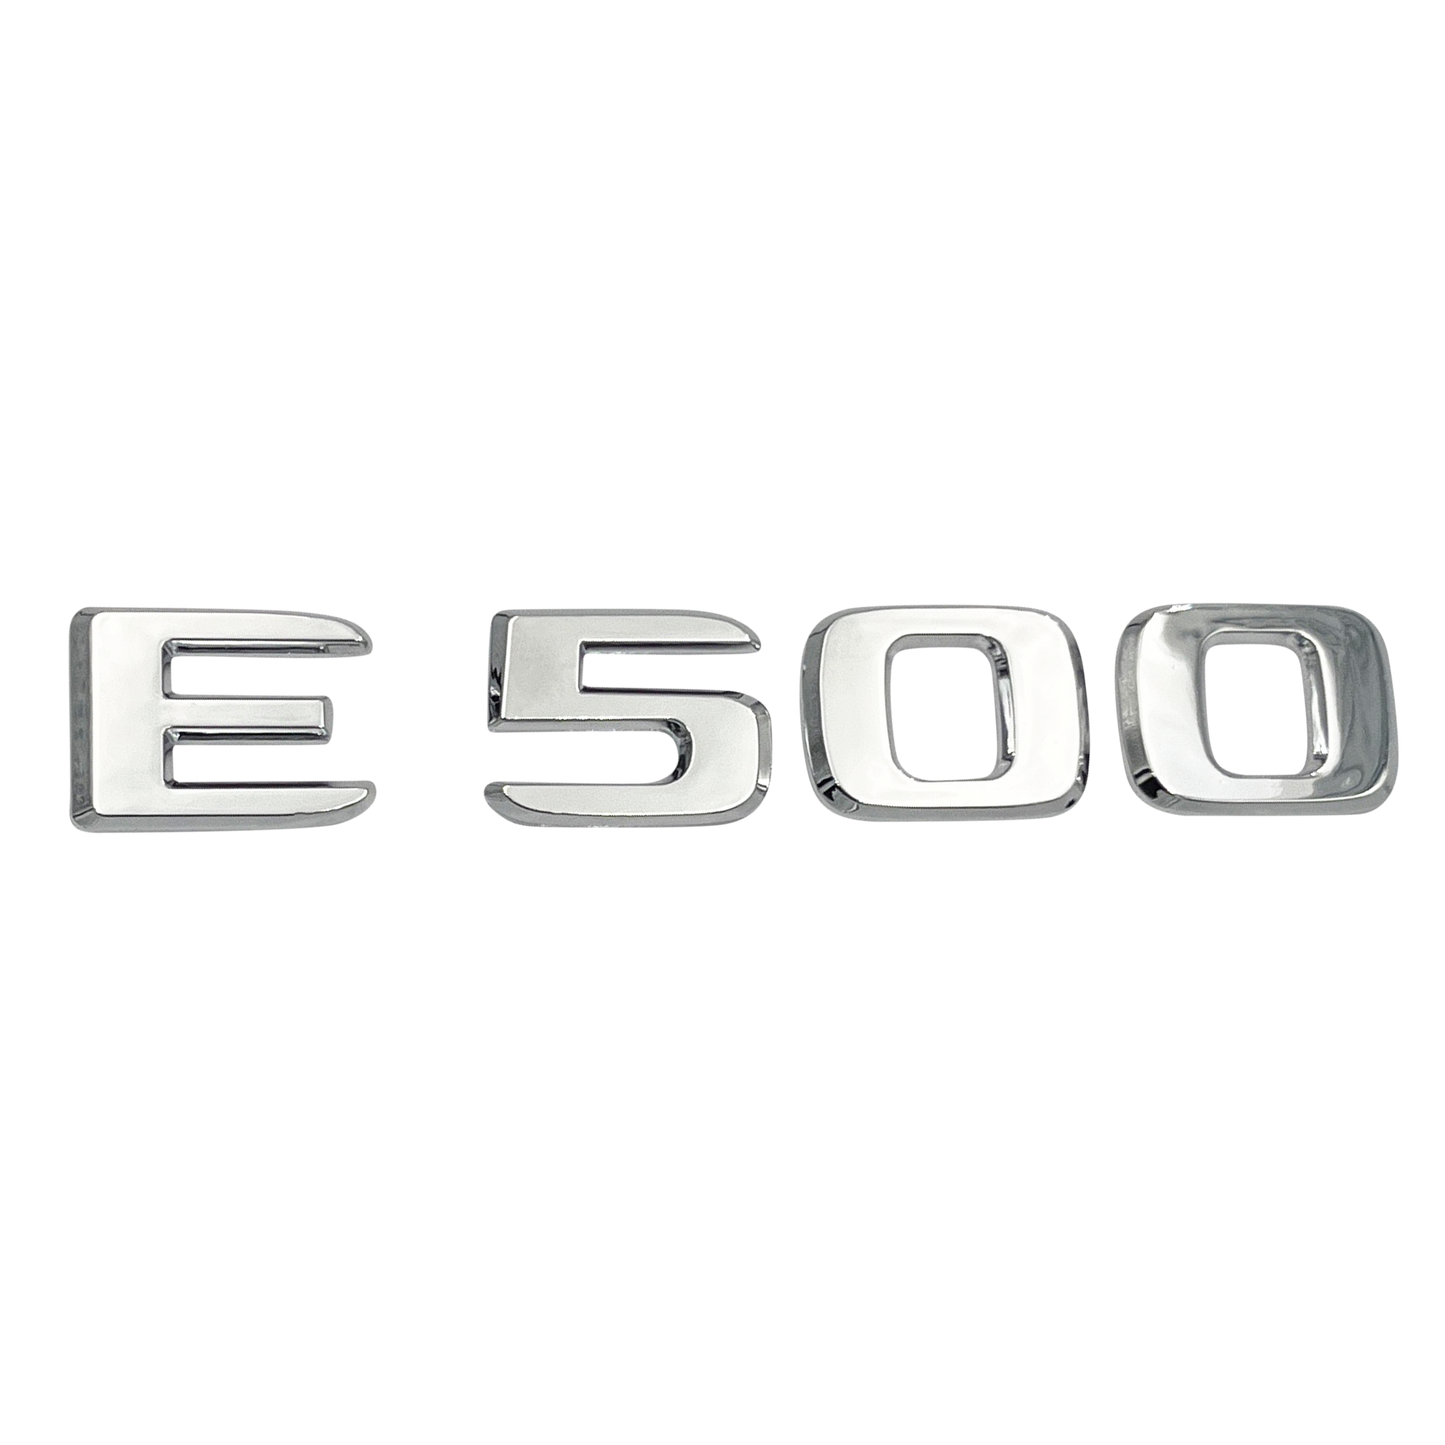 Chrome Mercedes E500 Emblem Badge 